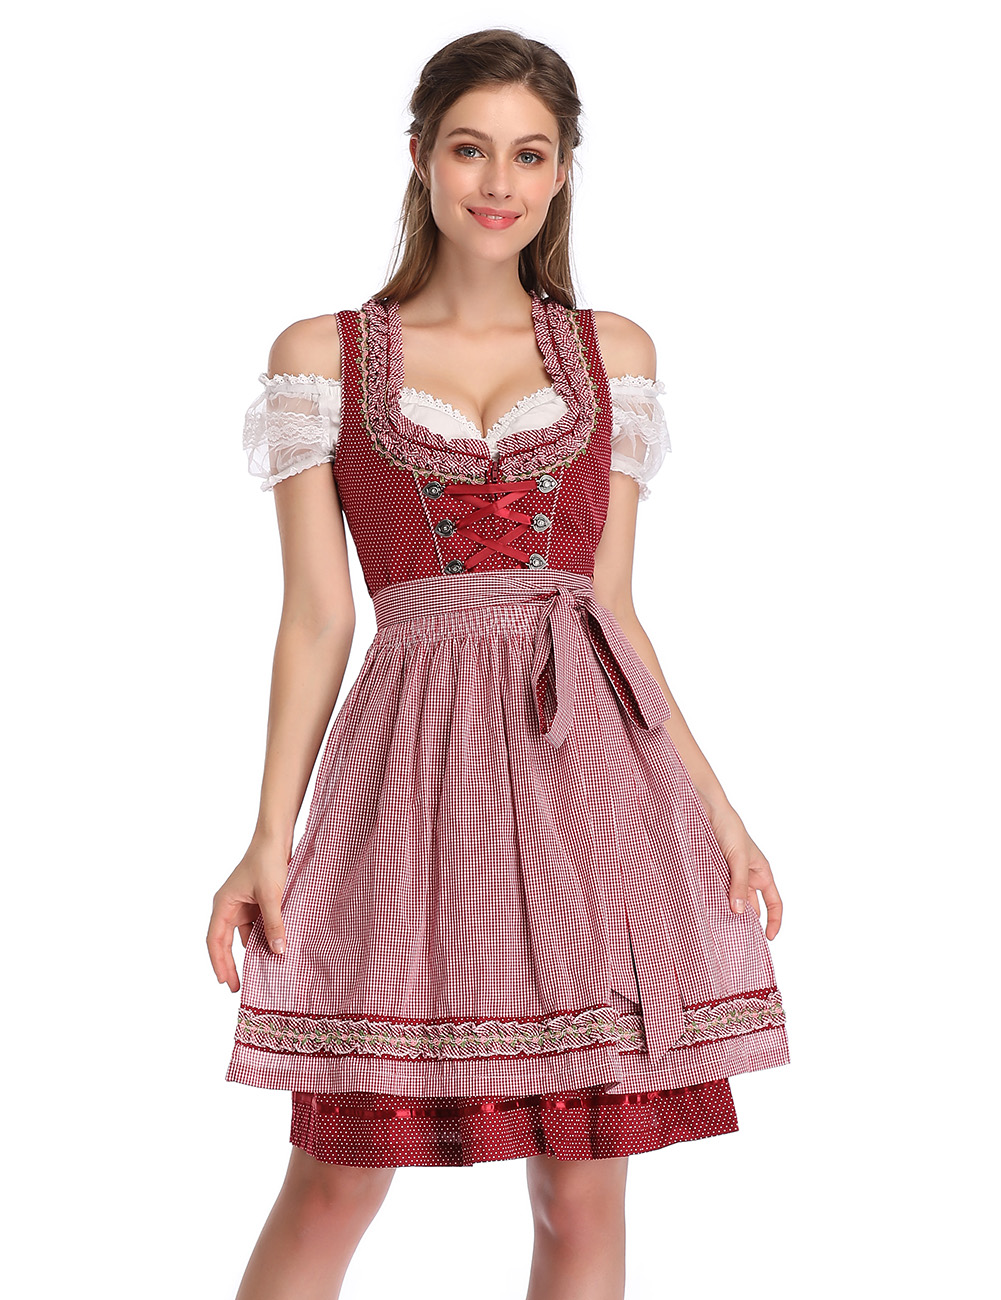 EU KOJOOIN Women's Vintage 3-Piece Oktoberfest Embroidery Dirndl Dress Burgundy Polka Dot 40